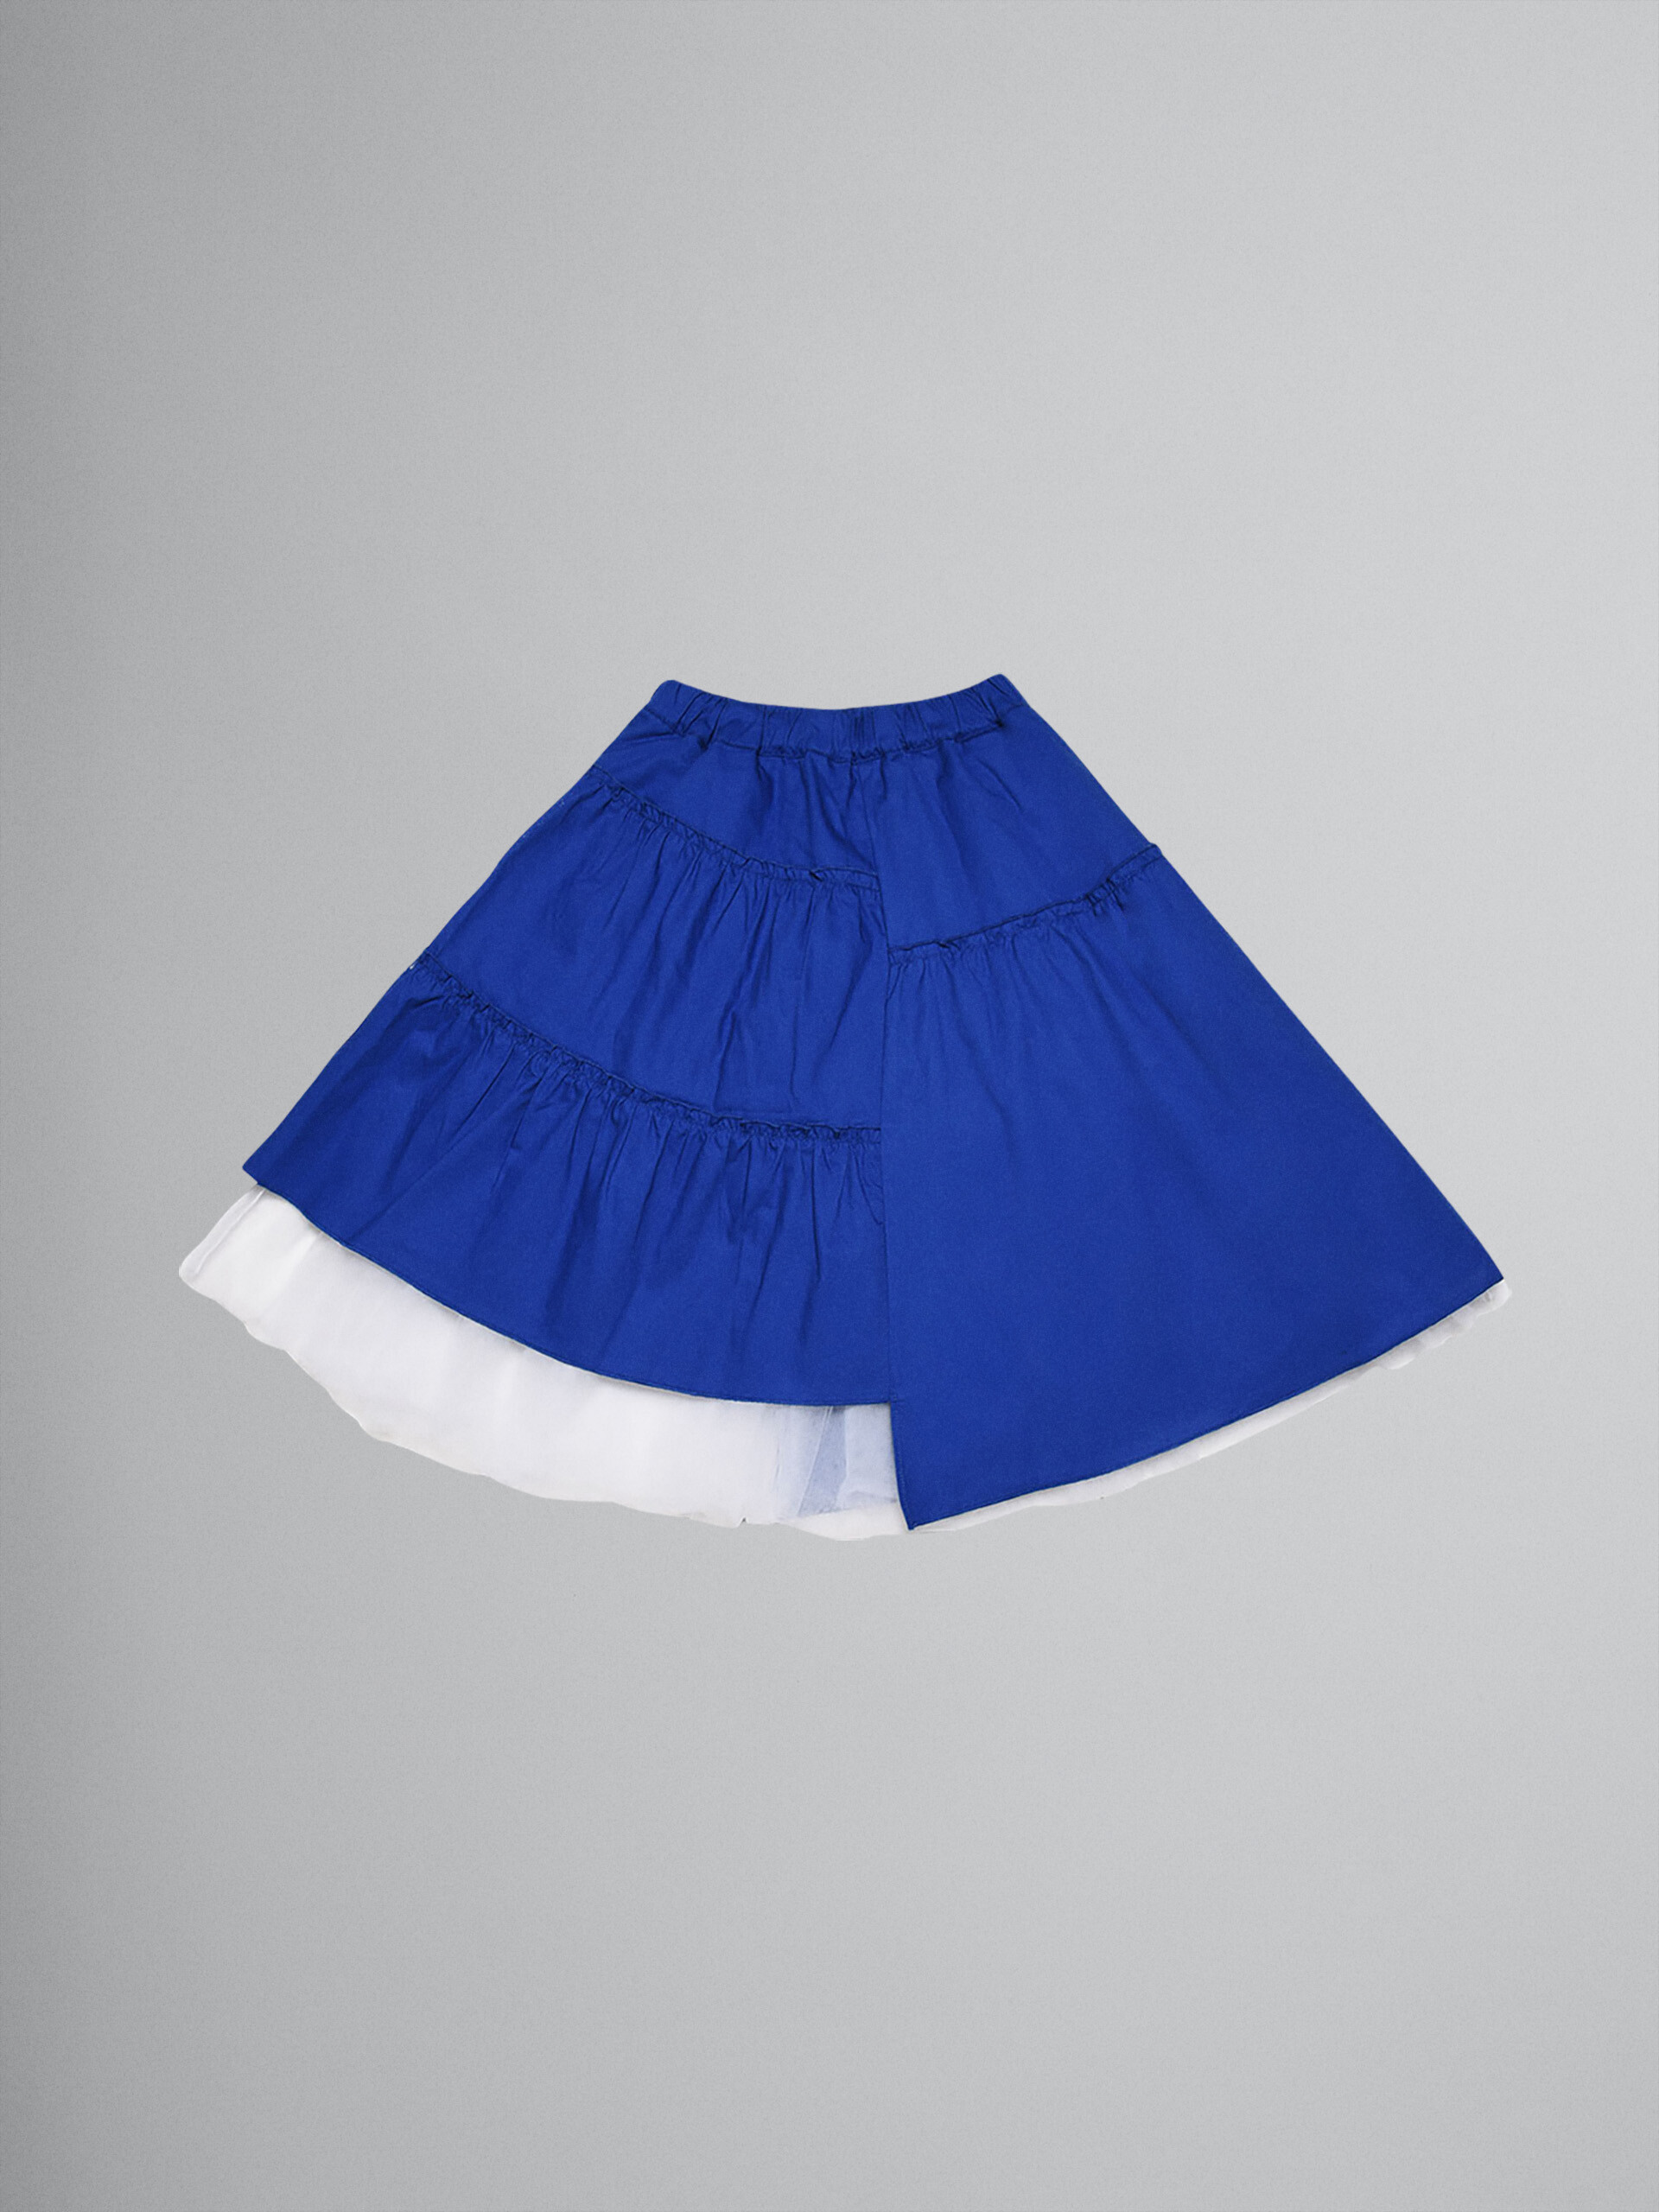 Cotton gabardine and tulle skirt - Skirts - Image 2